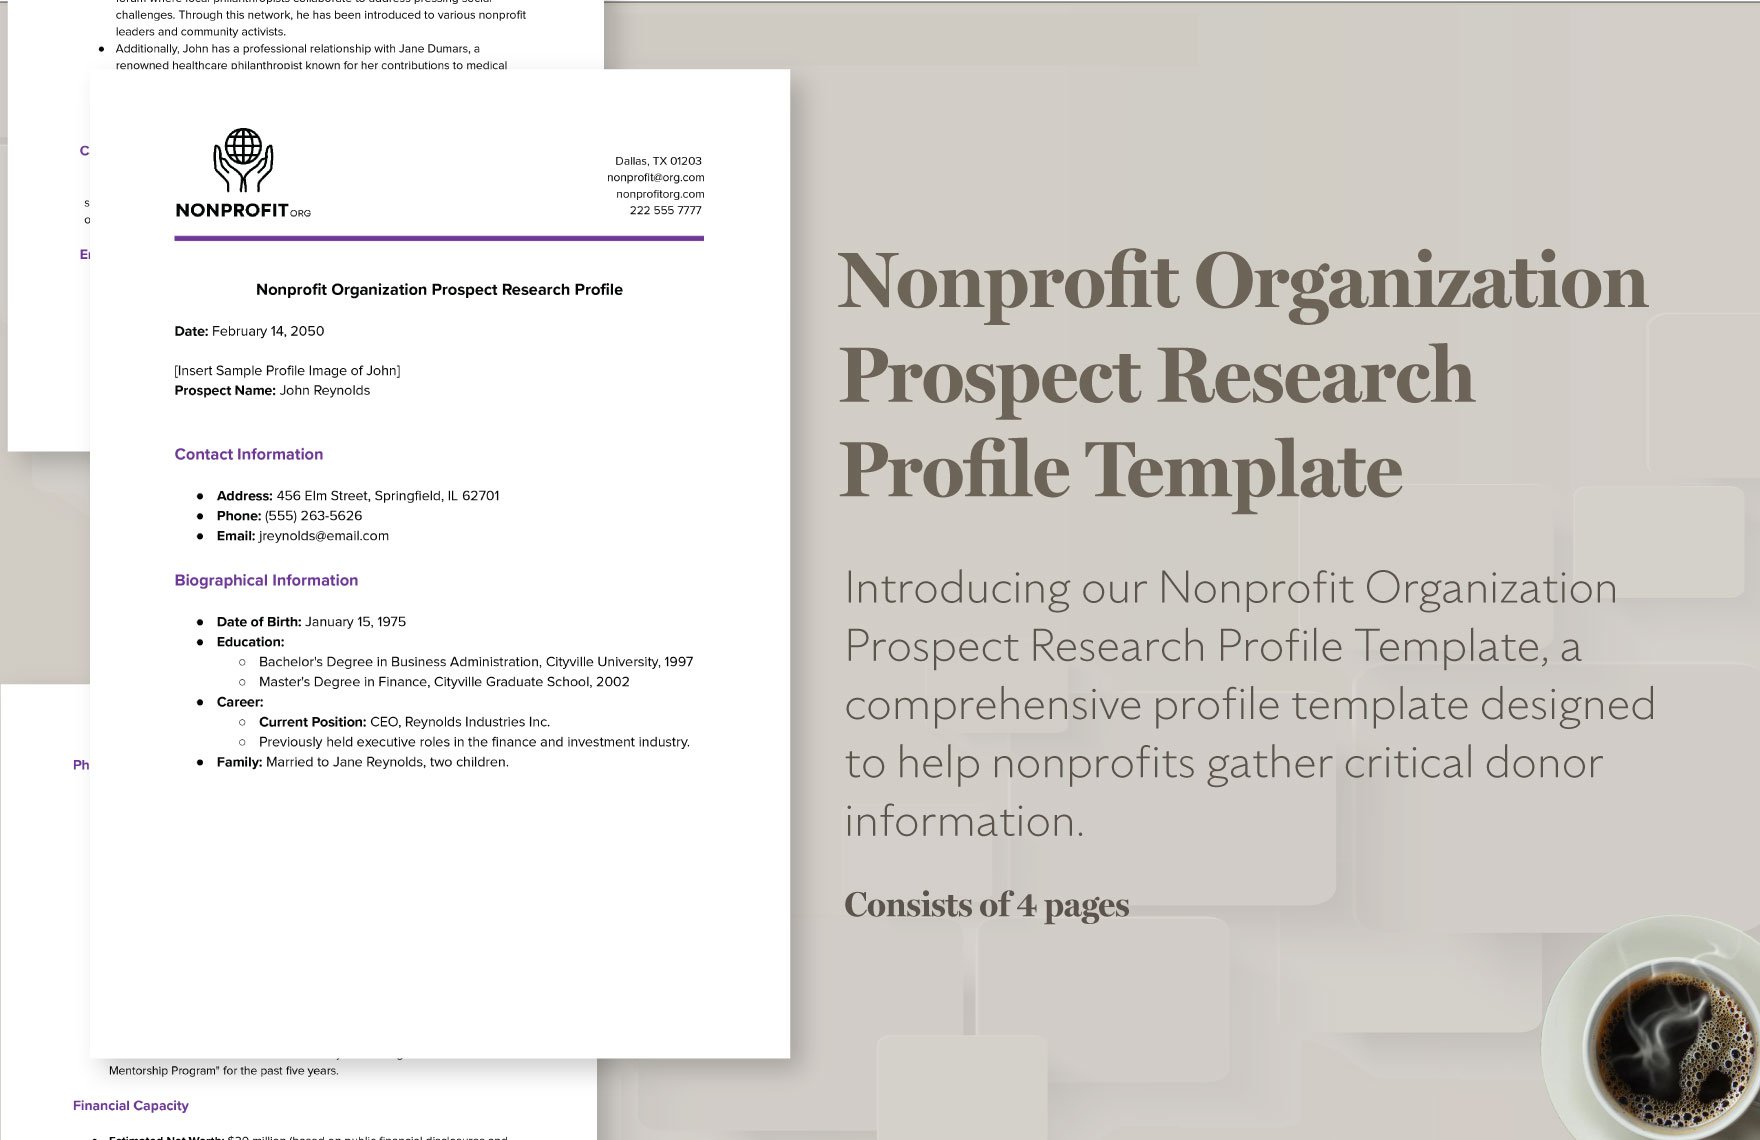 Nonprofit Organization Prospect Research Profile Template